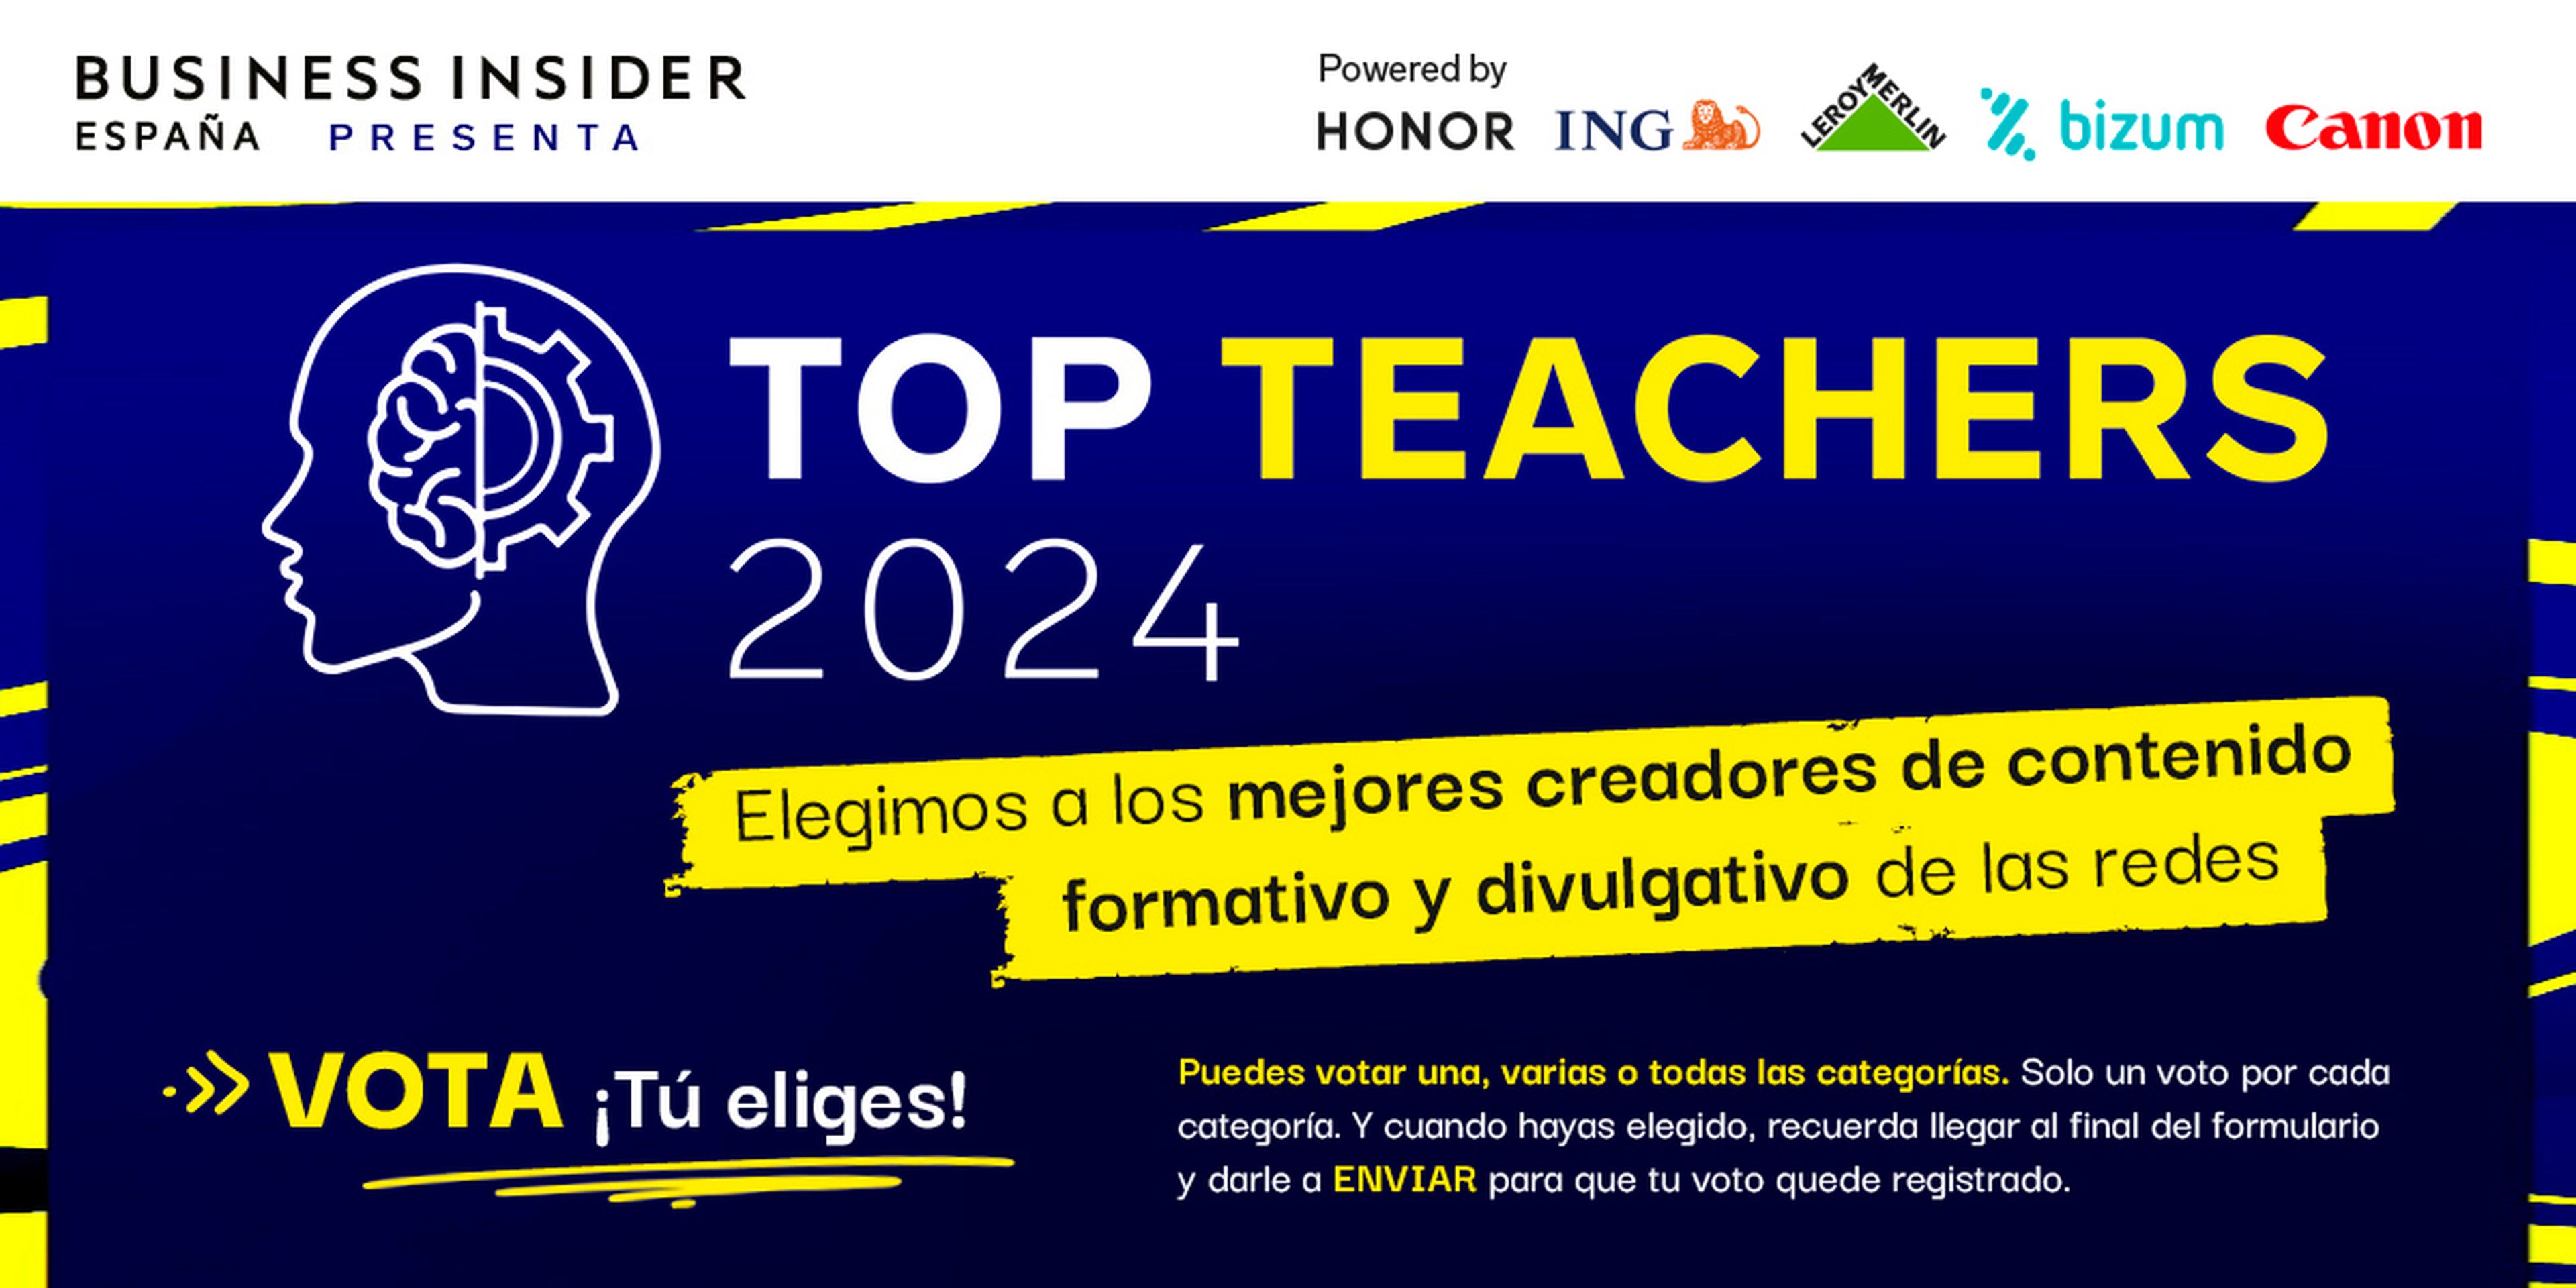 Top Teachers 2024 vota